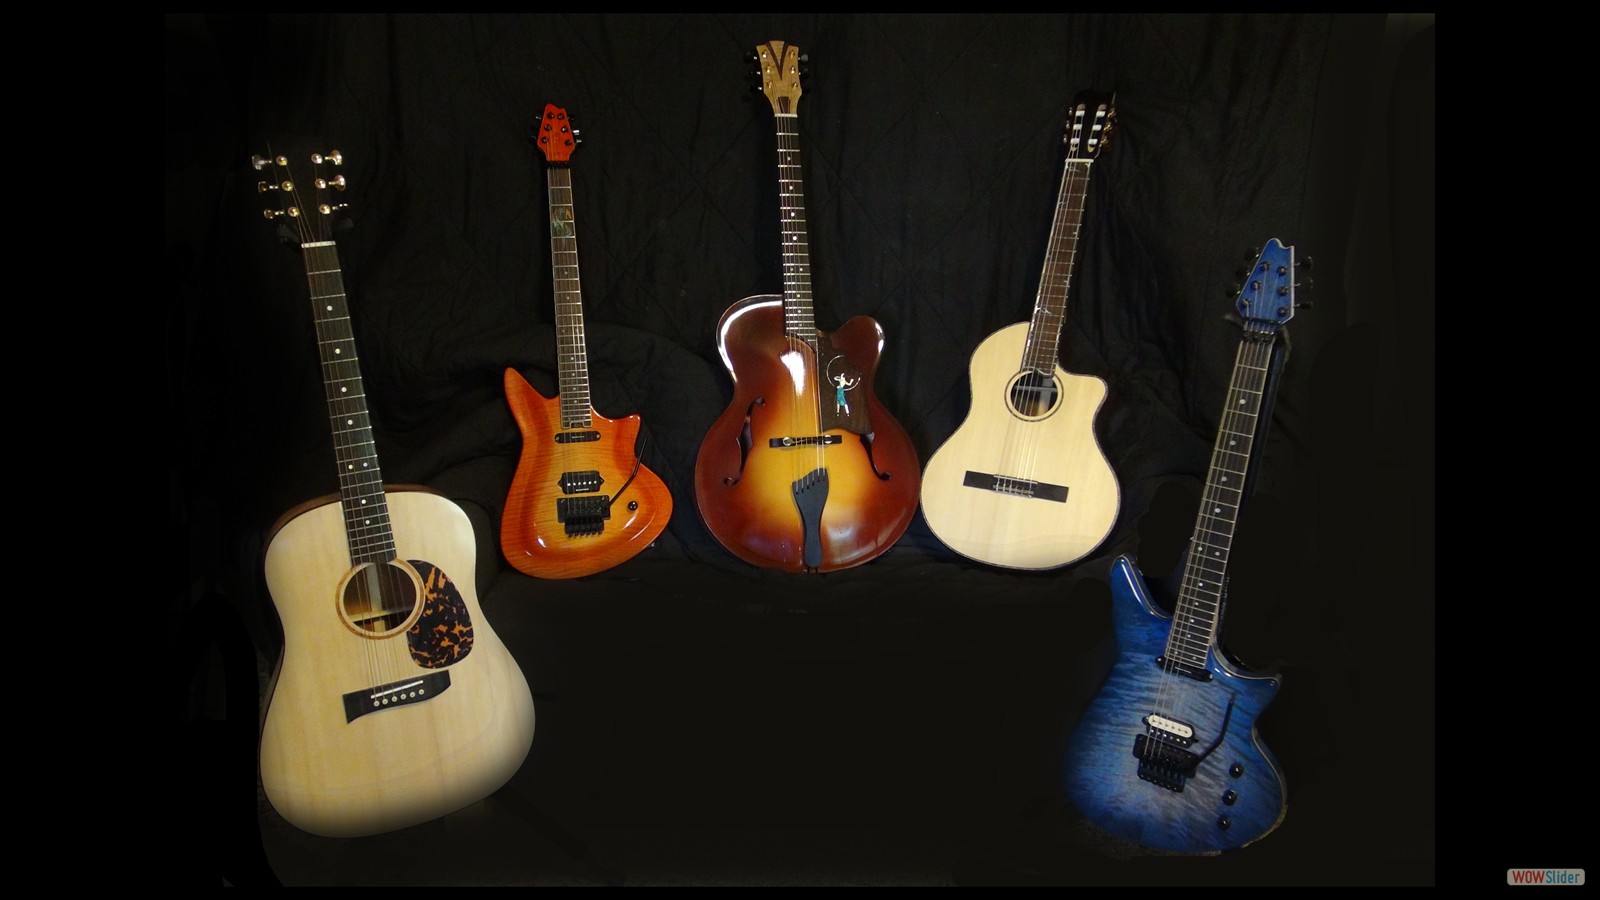 Studio 24 Family of guitars